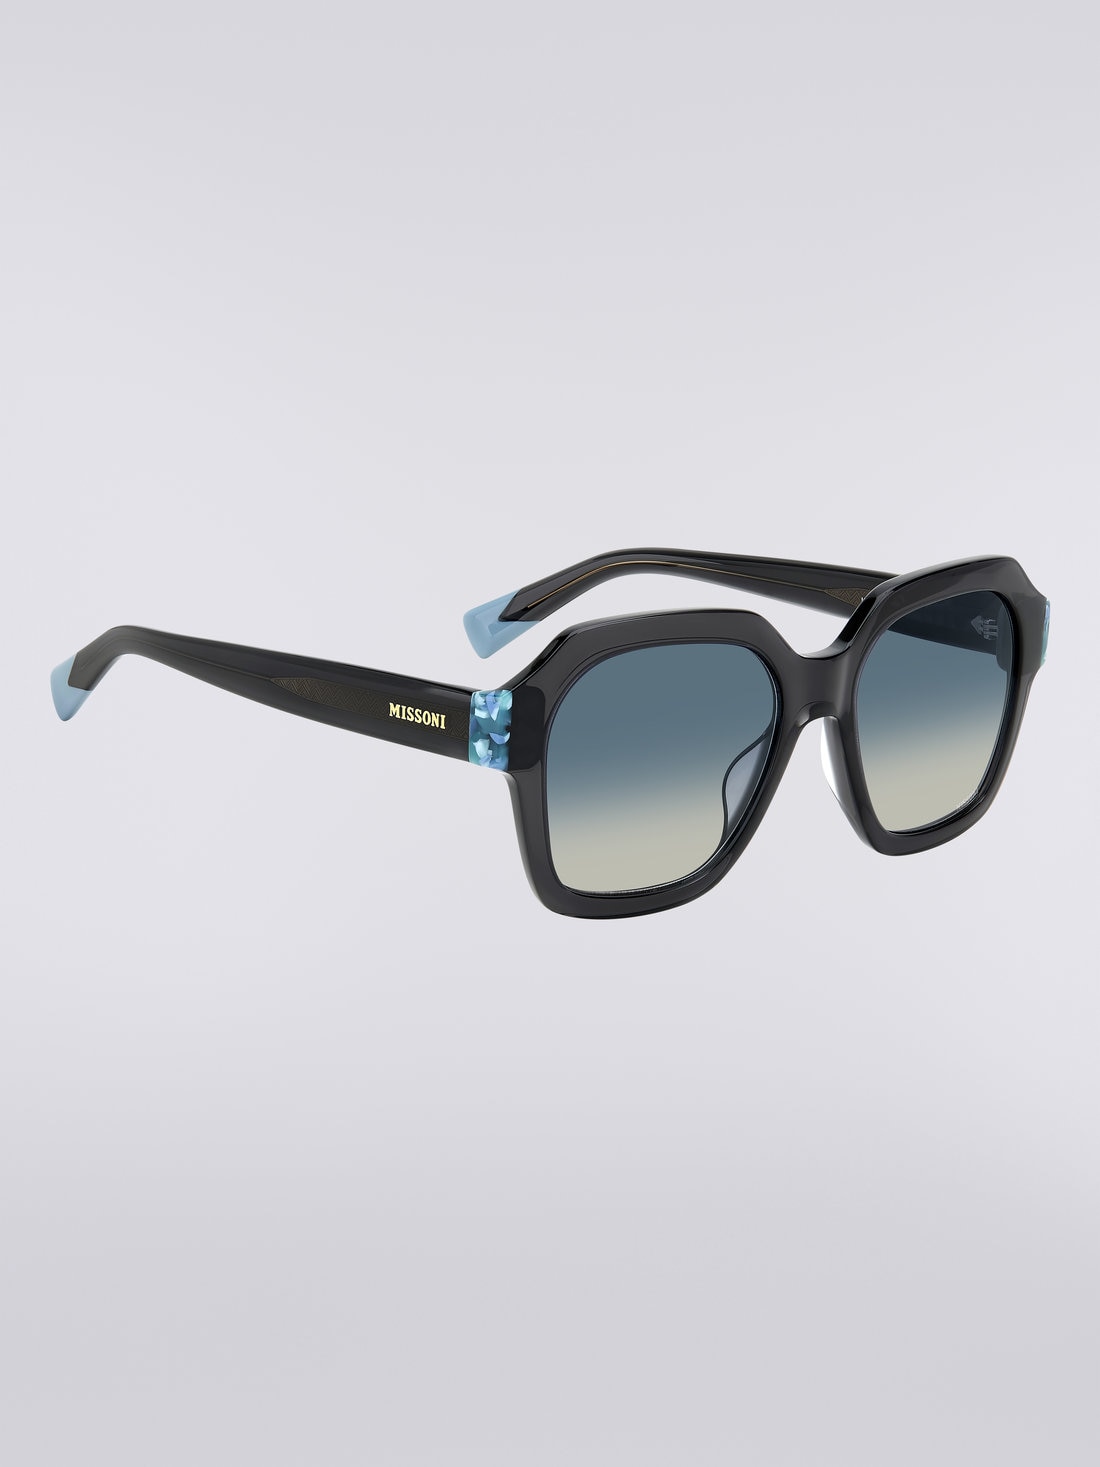 Missoni Seasonal Acetate Sunglasses, Grey - 8051575840142 - 2